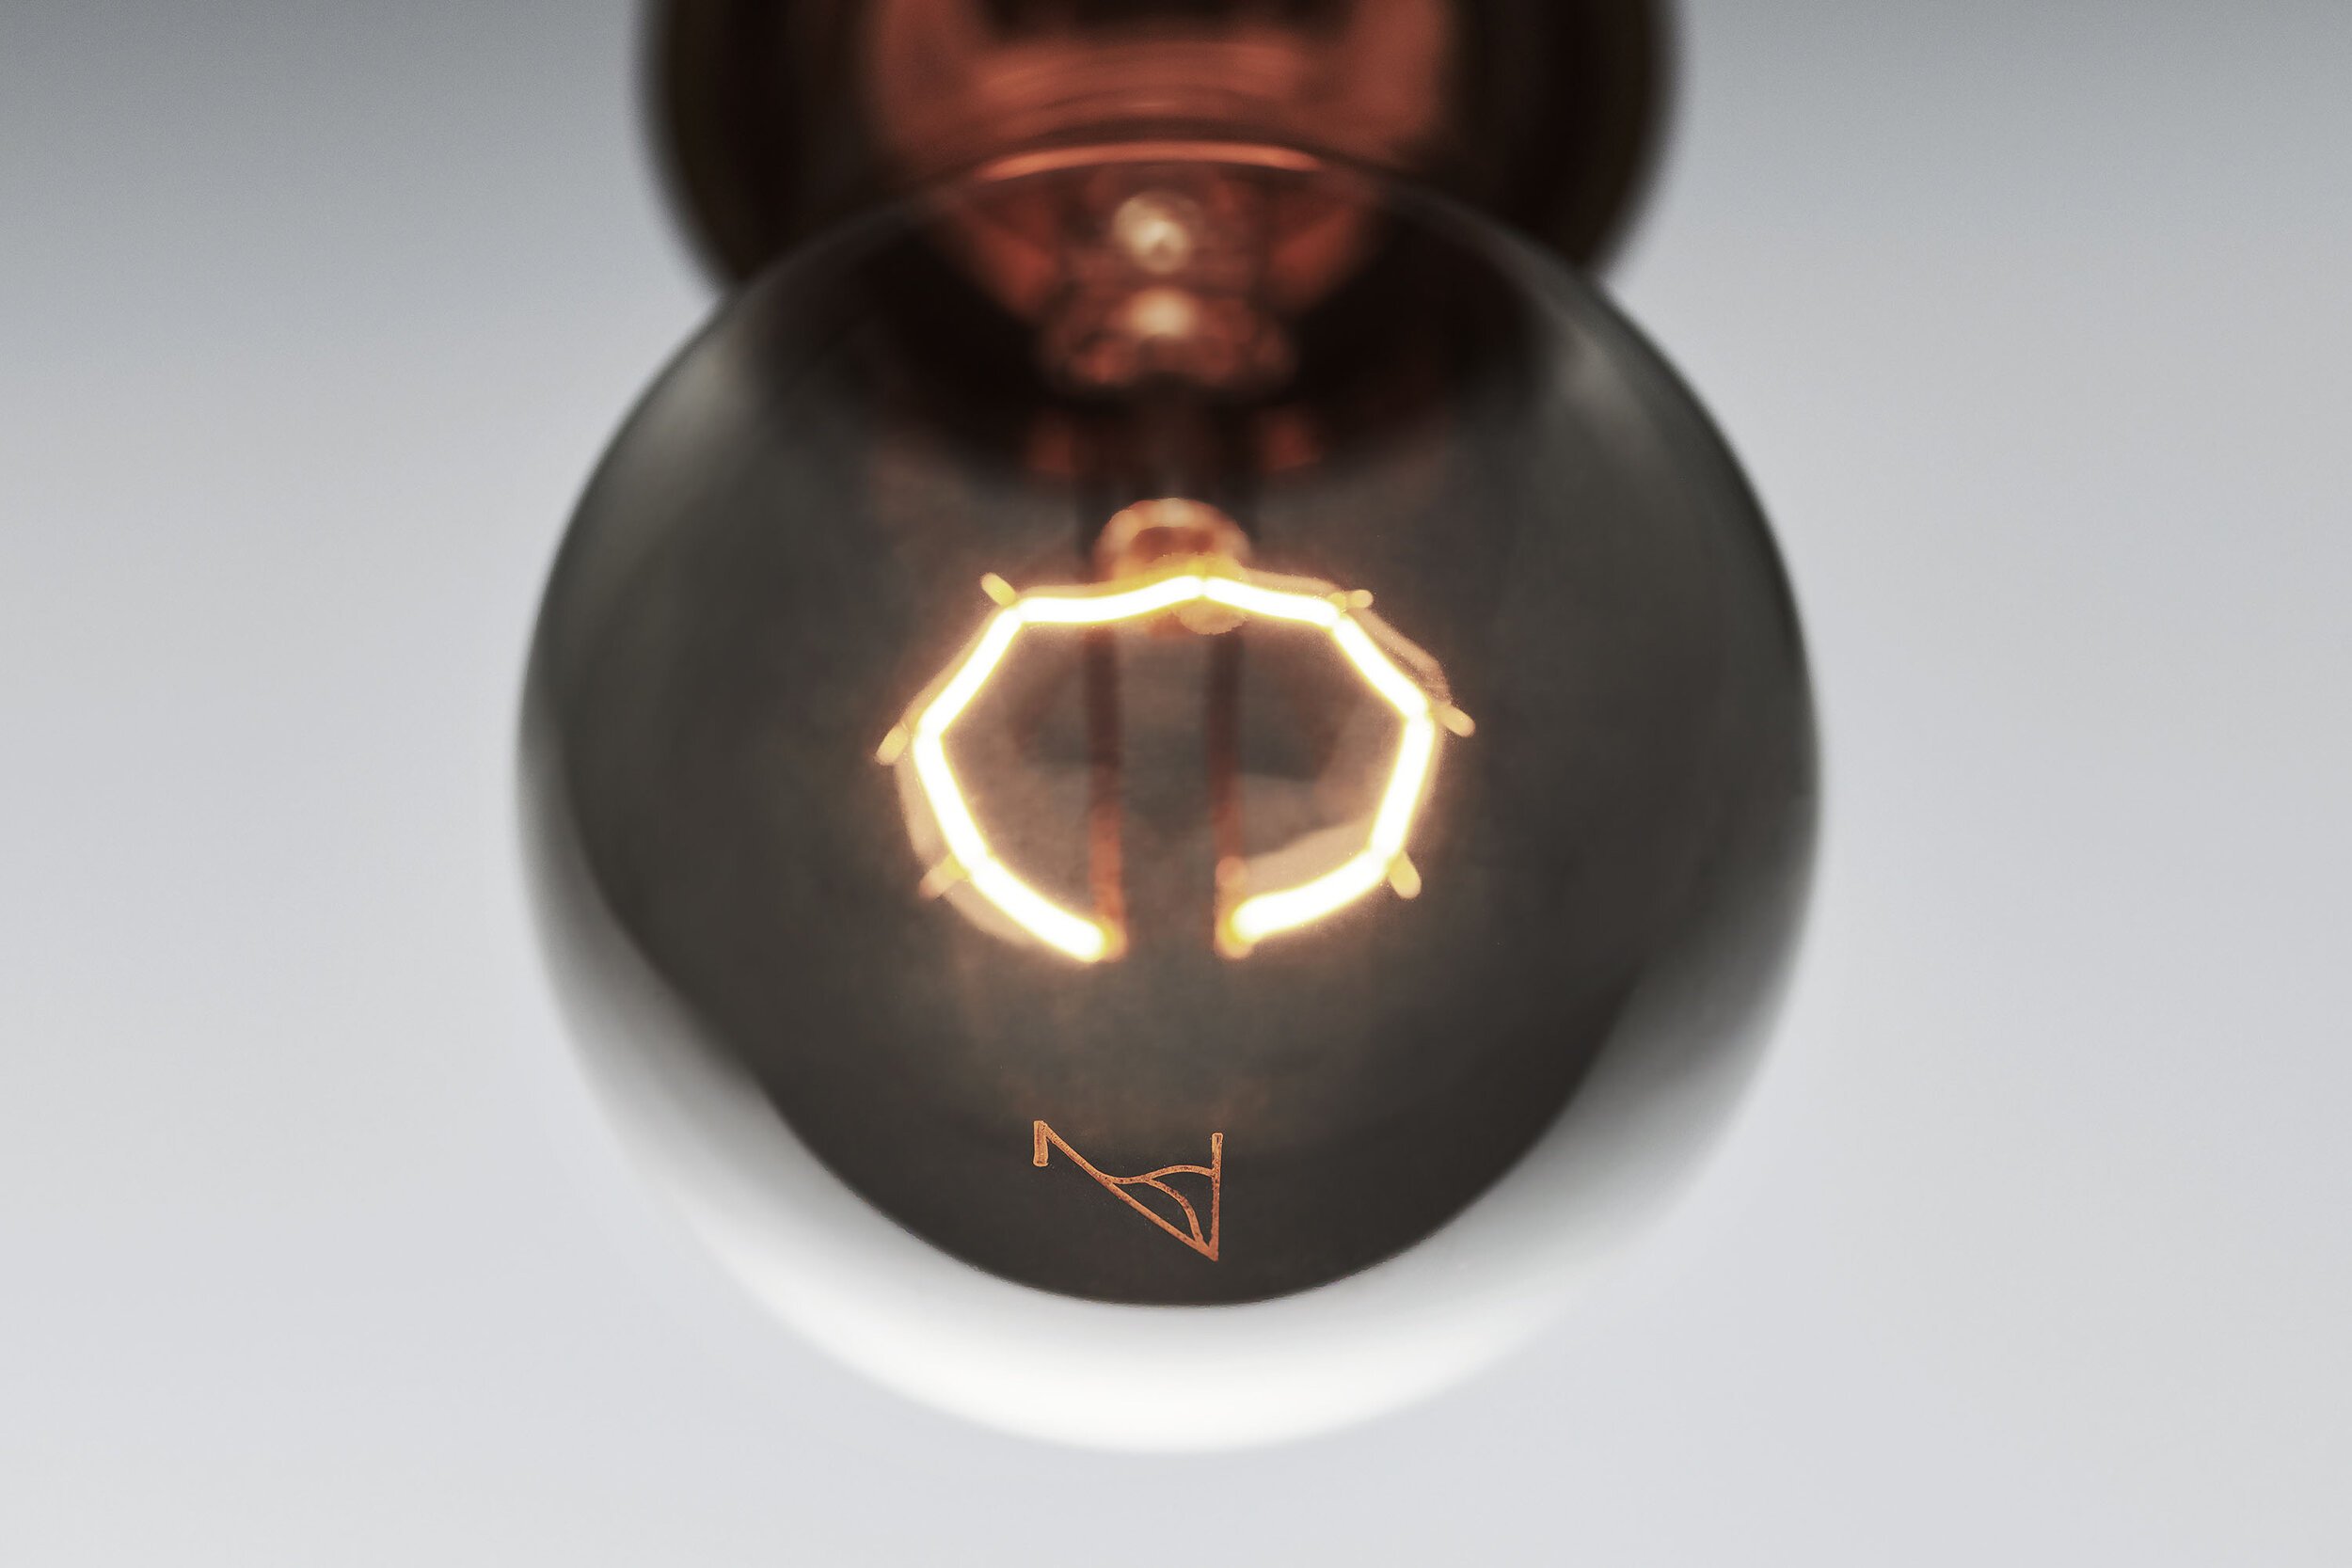  NEW LIGHT POTTERY ニューライトポタリーのオリジナル白熱電球 FILAMENTのE17タイプ。フィラメントは9角形としている。 